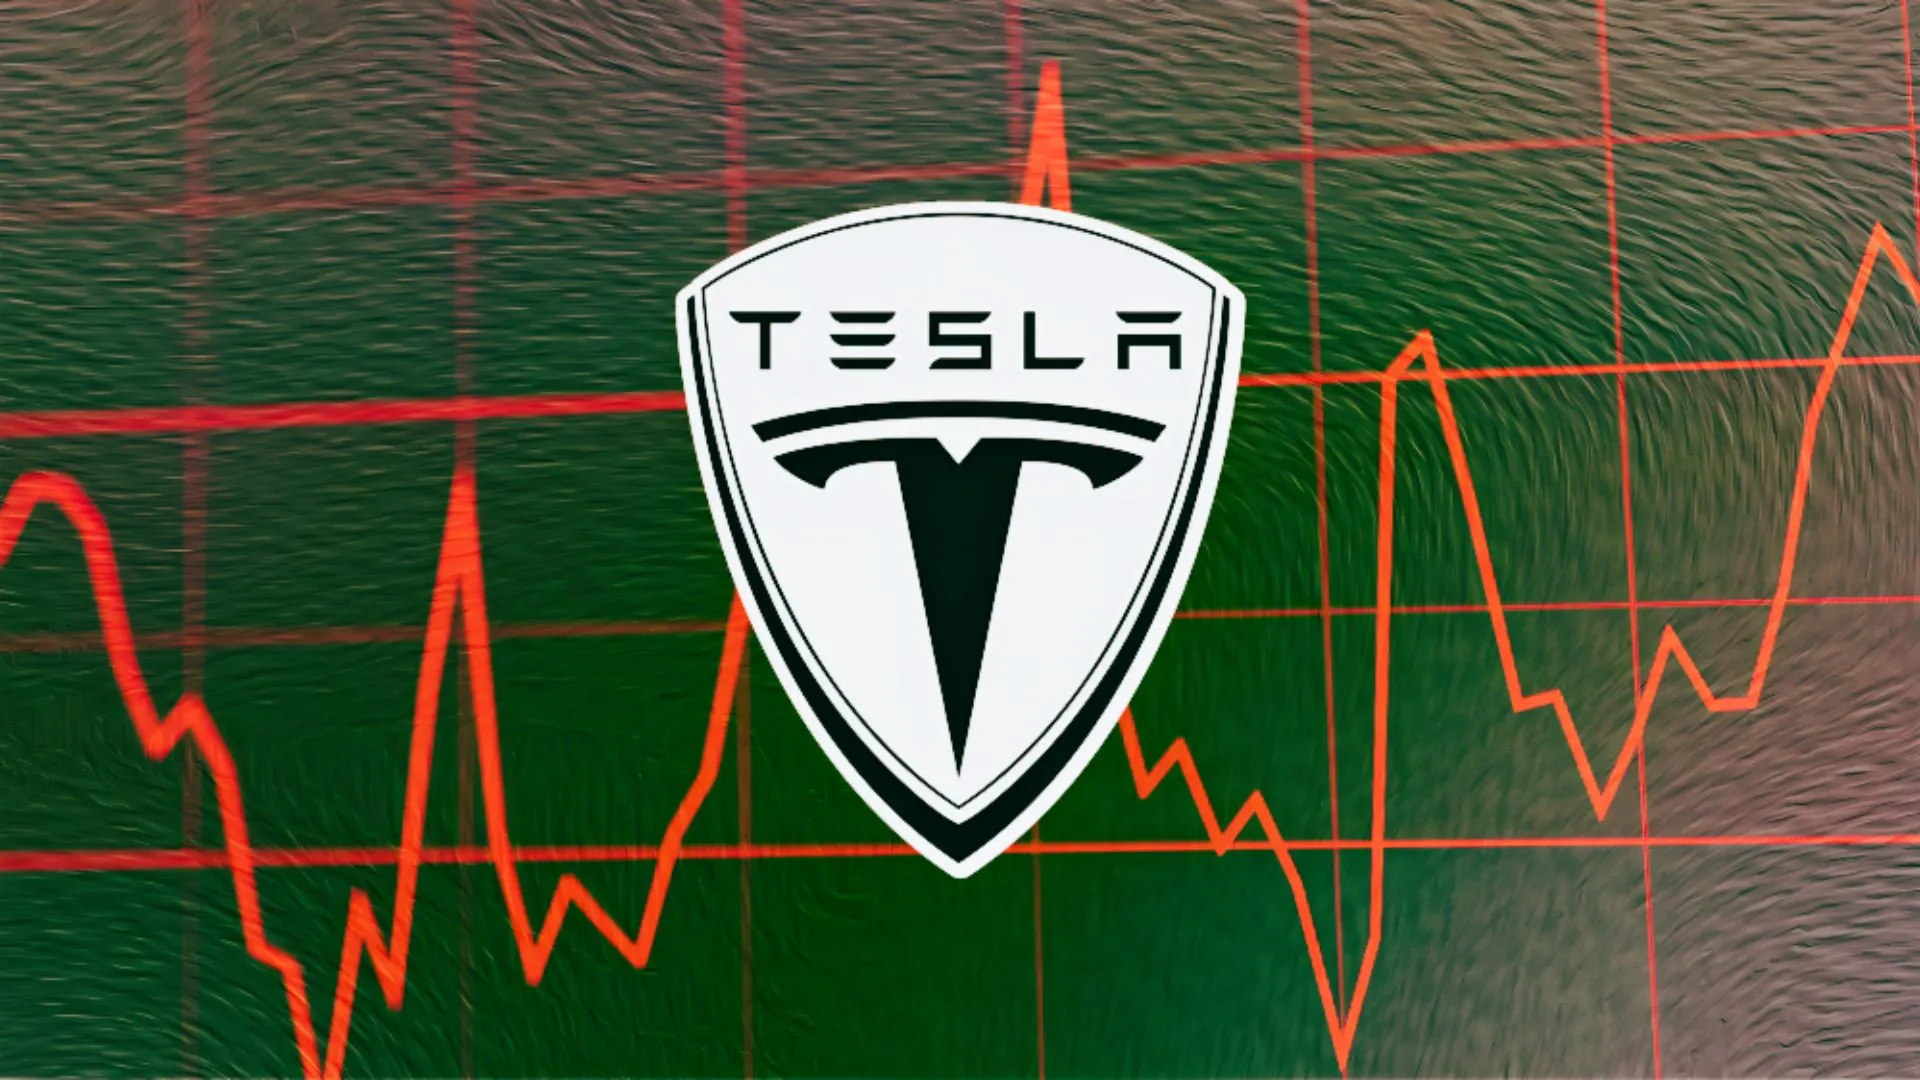 Tesla Inc. Price Analysis: Will TSLA Remain Profitable?